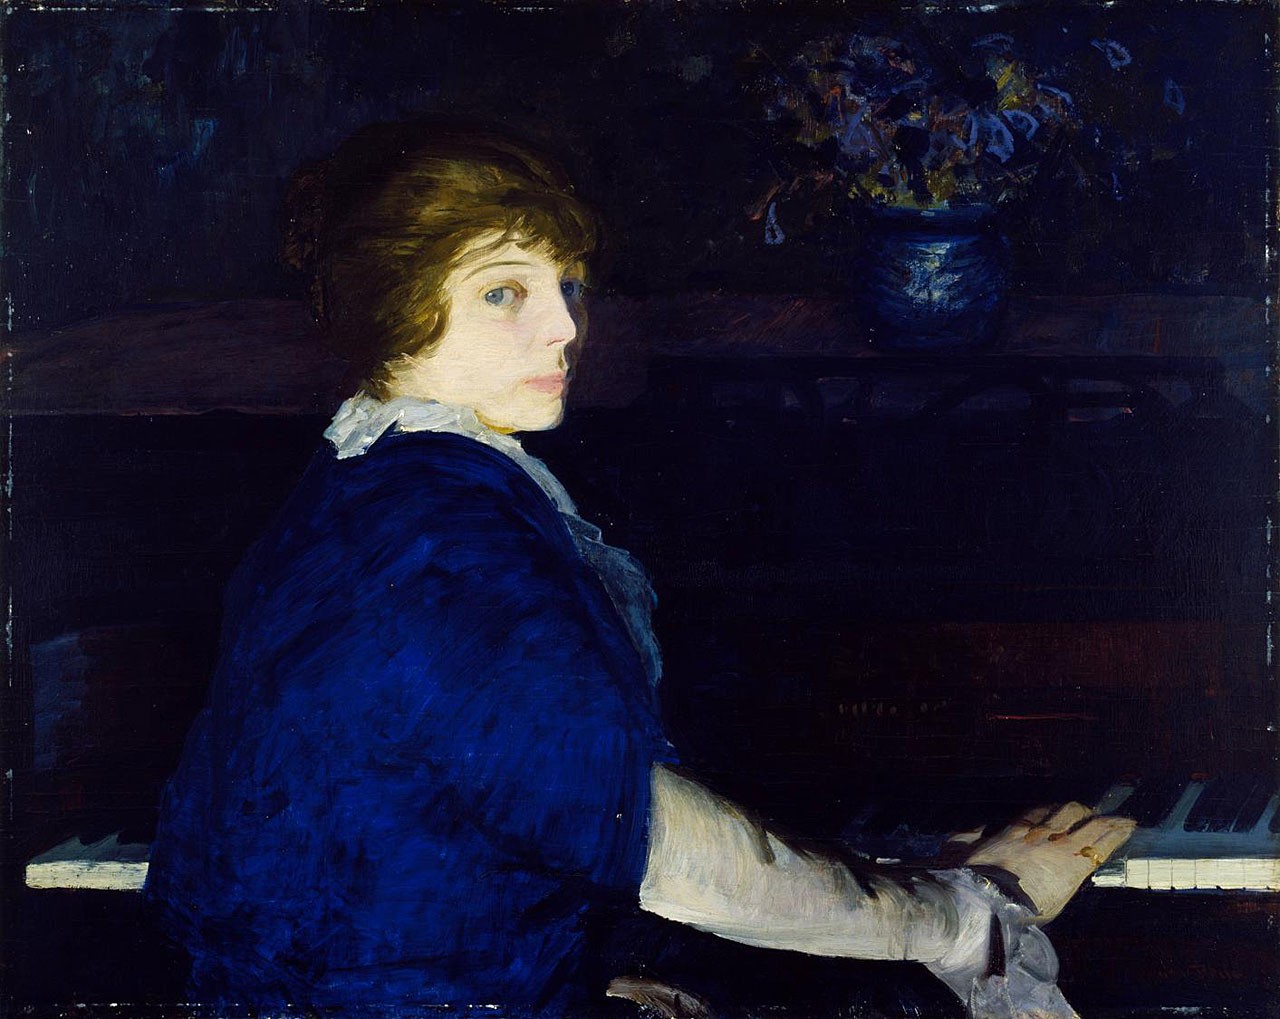 Emma Piyano Başında by George Bellows - 1914 